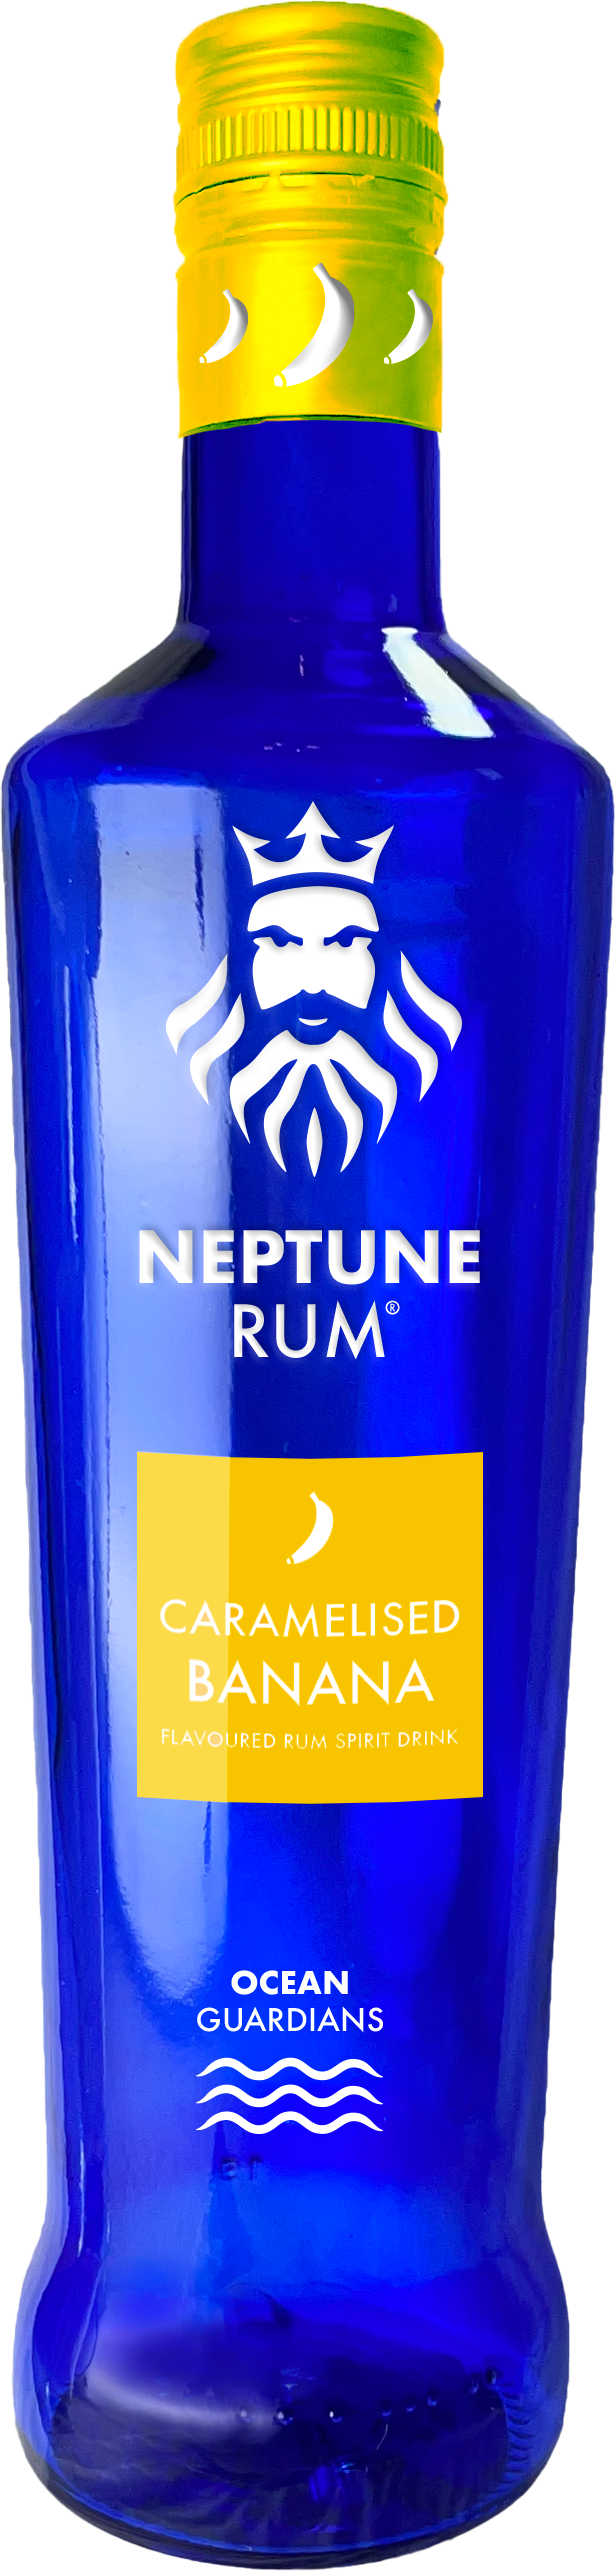 Neptune Caramelised Banana Rum 70cl